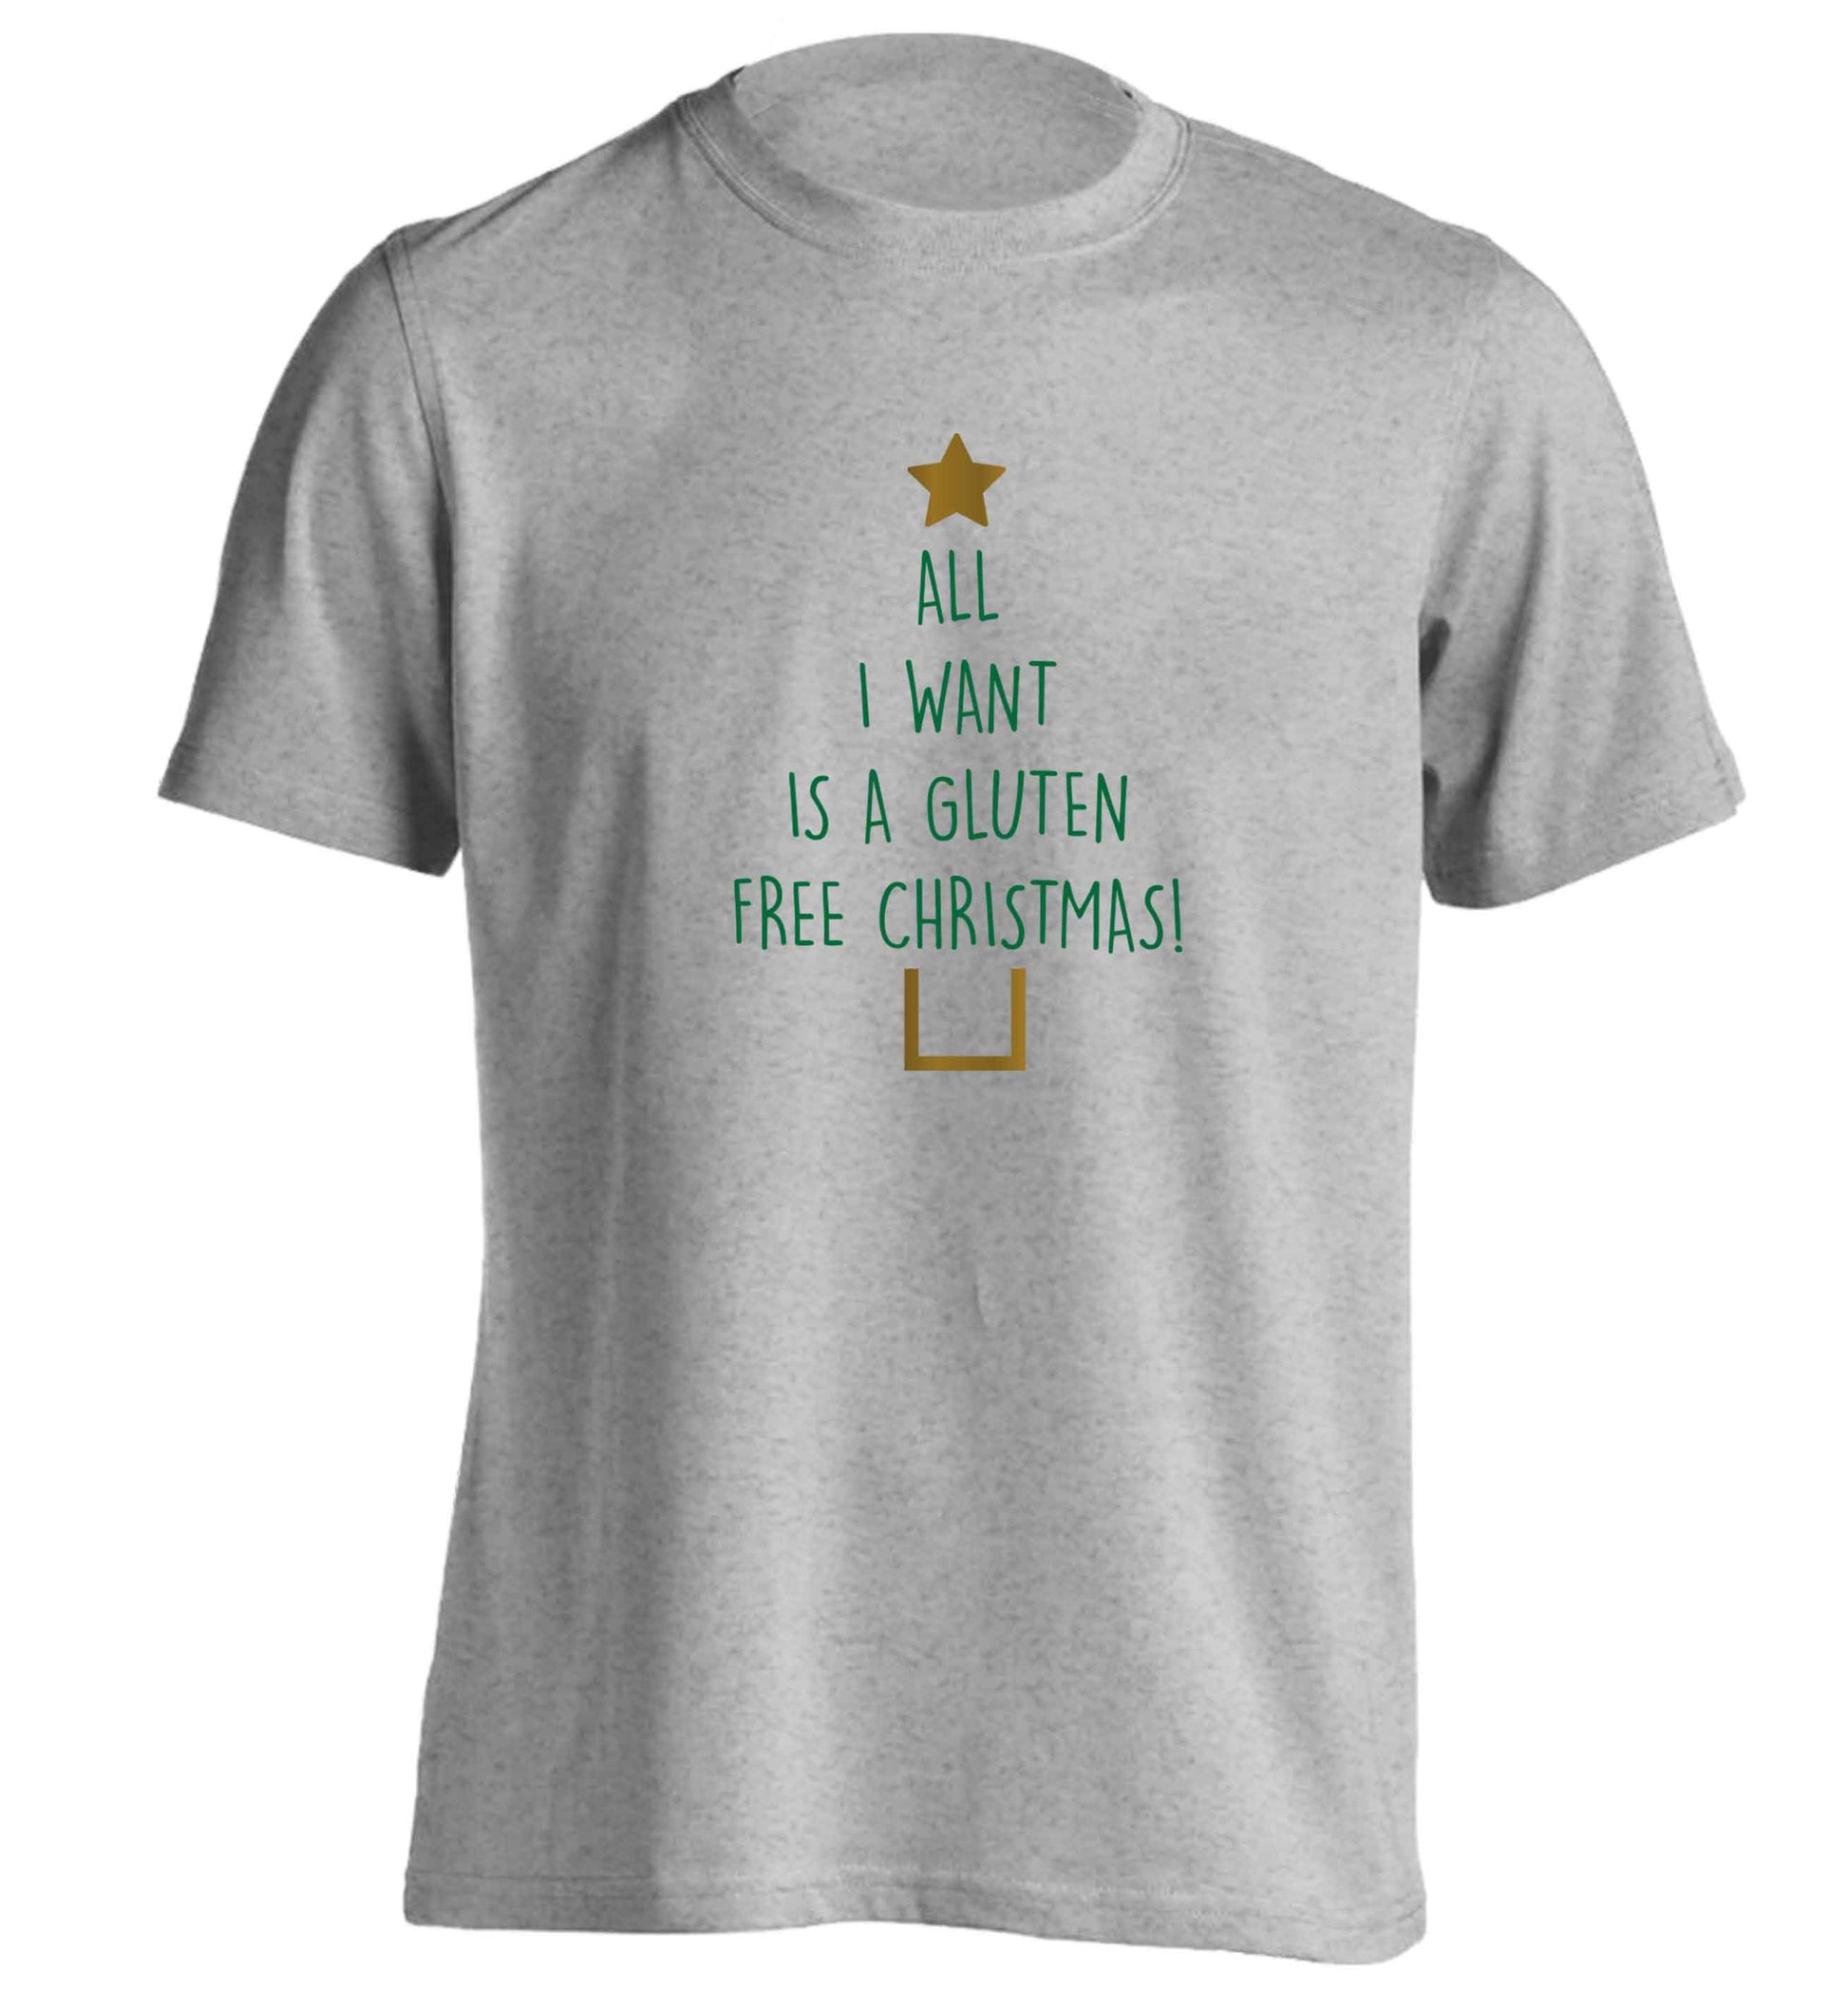 All I want is a gluten free Christmas adults unisex grey Tshirt 2XL